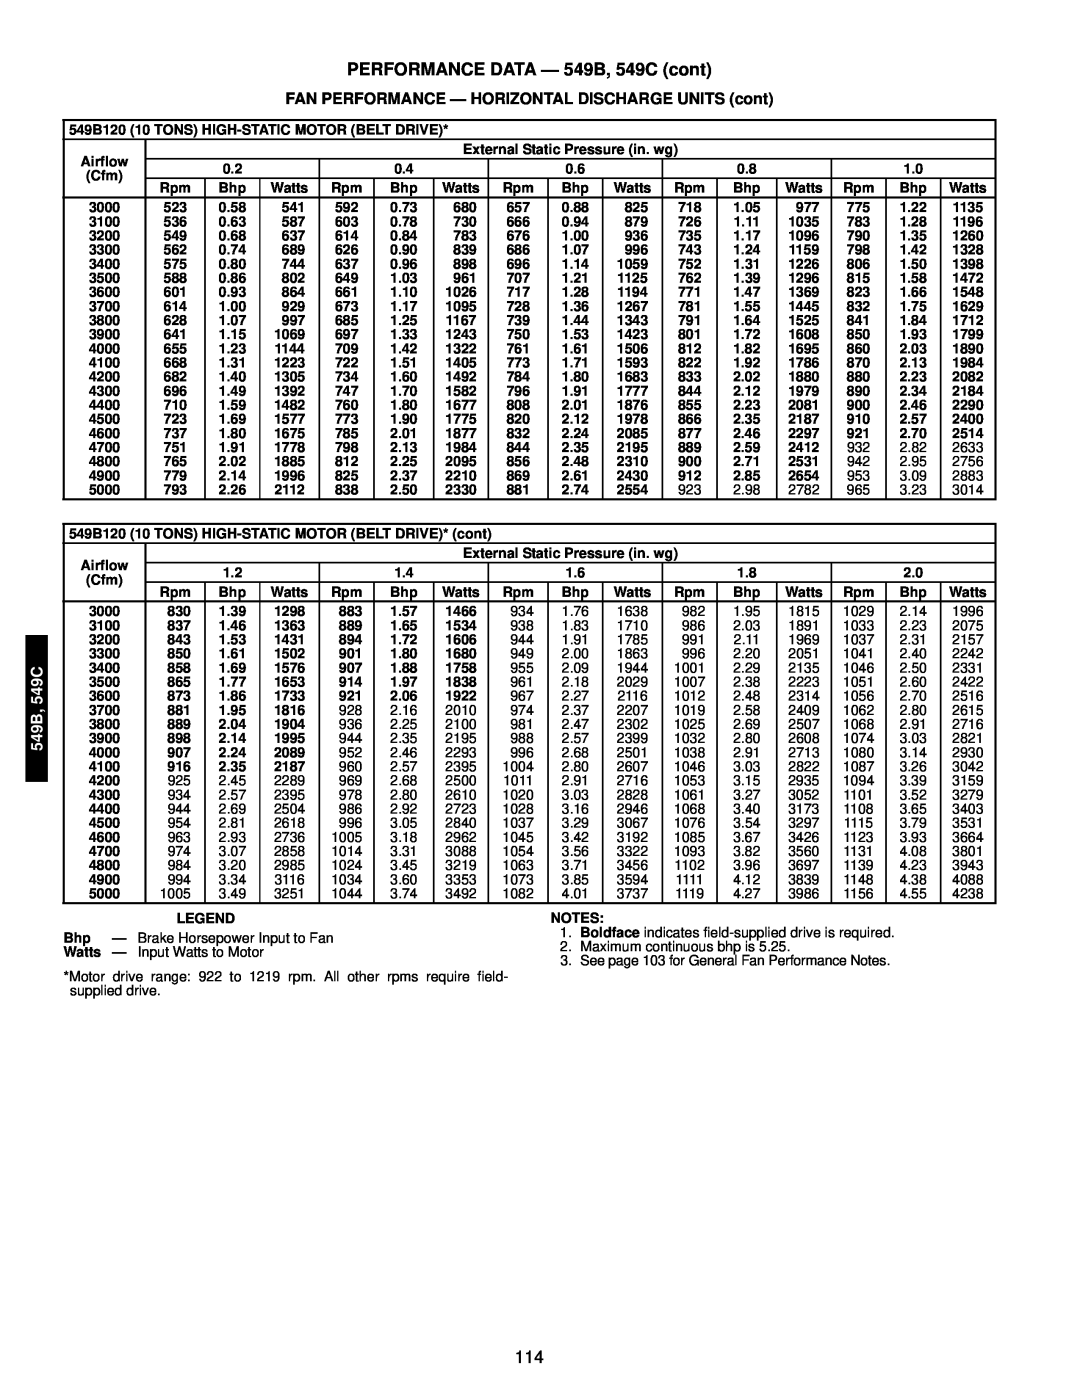 Bryant manual PERFORMANCE DATA — 549B, 549C cont, FAN PERFORMANCE — HORIZONTAL DISCHARGE UNITS cont 